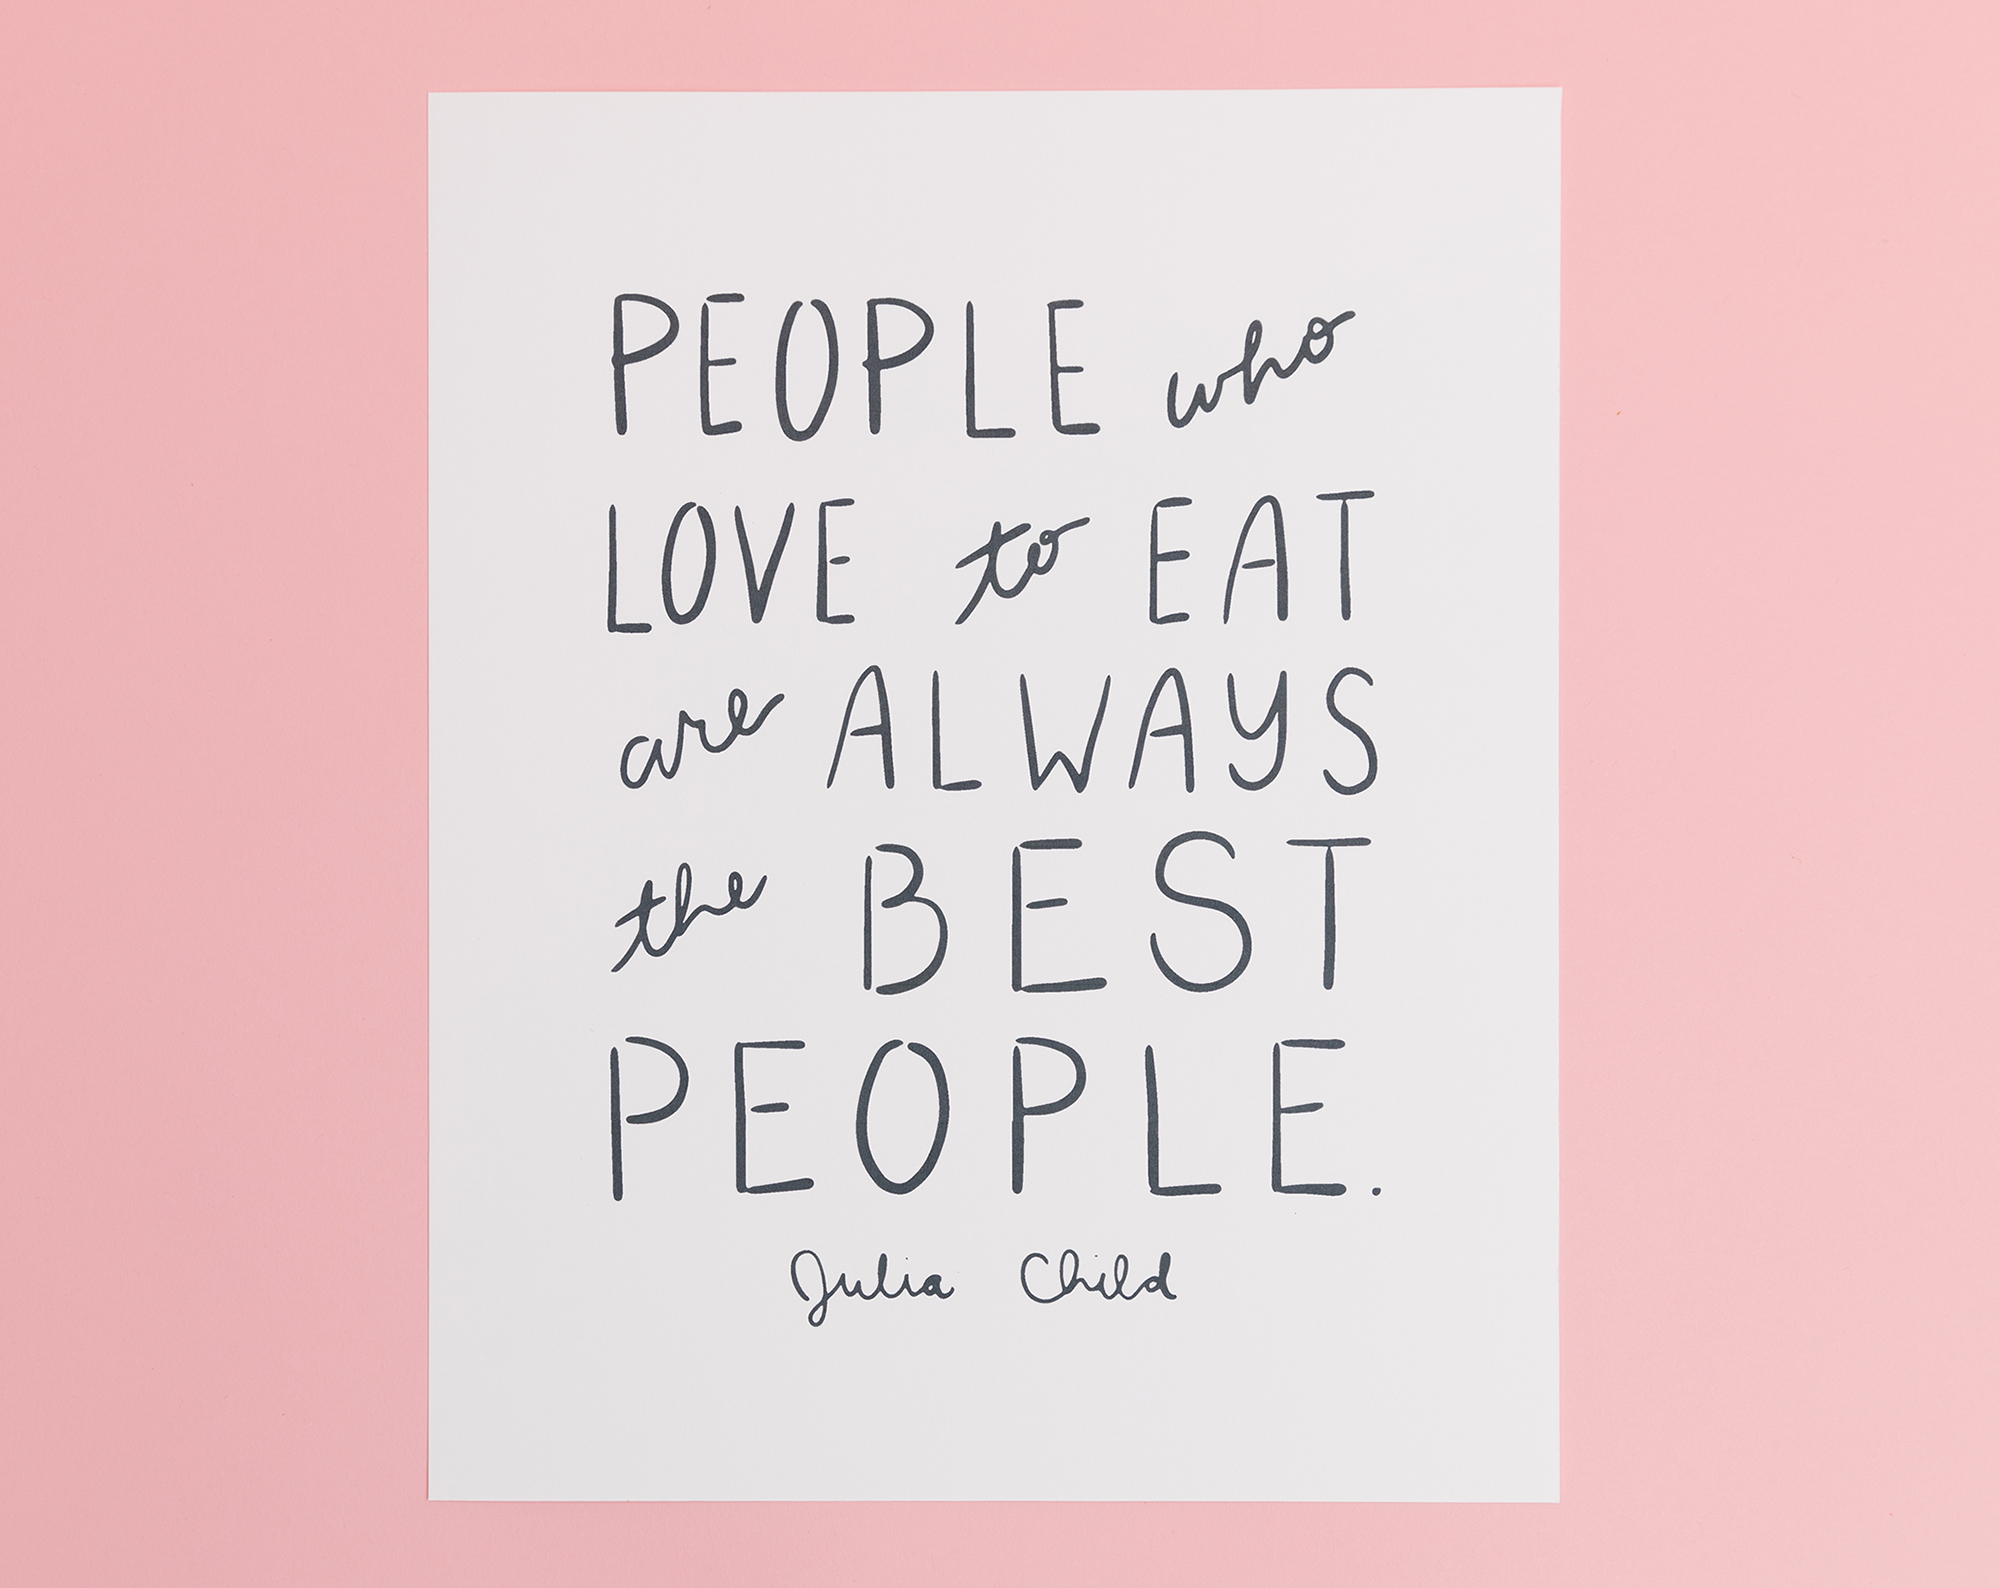 Julia Child quote art print, 8x10